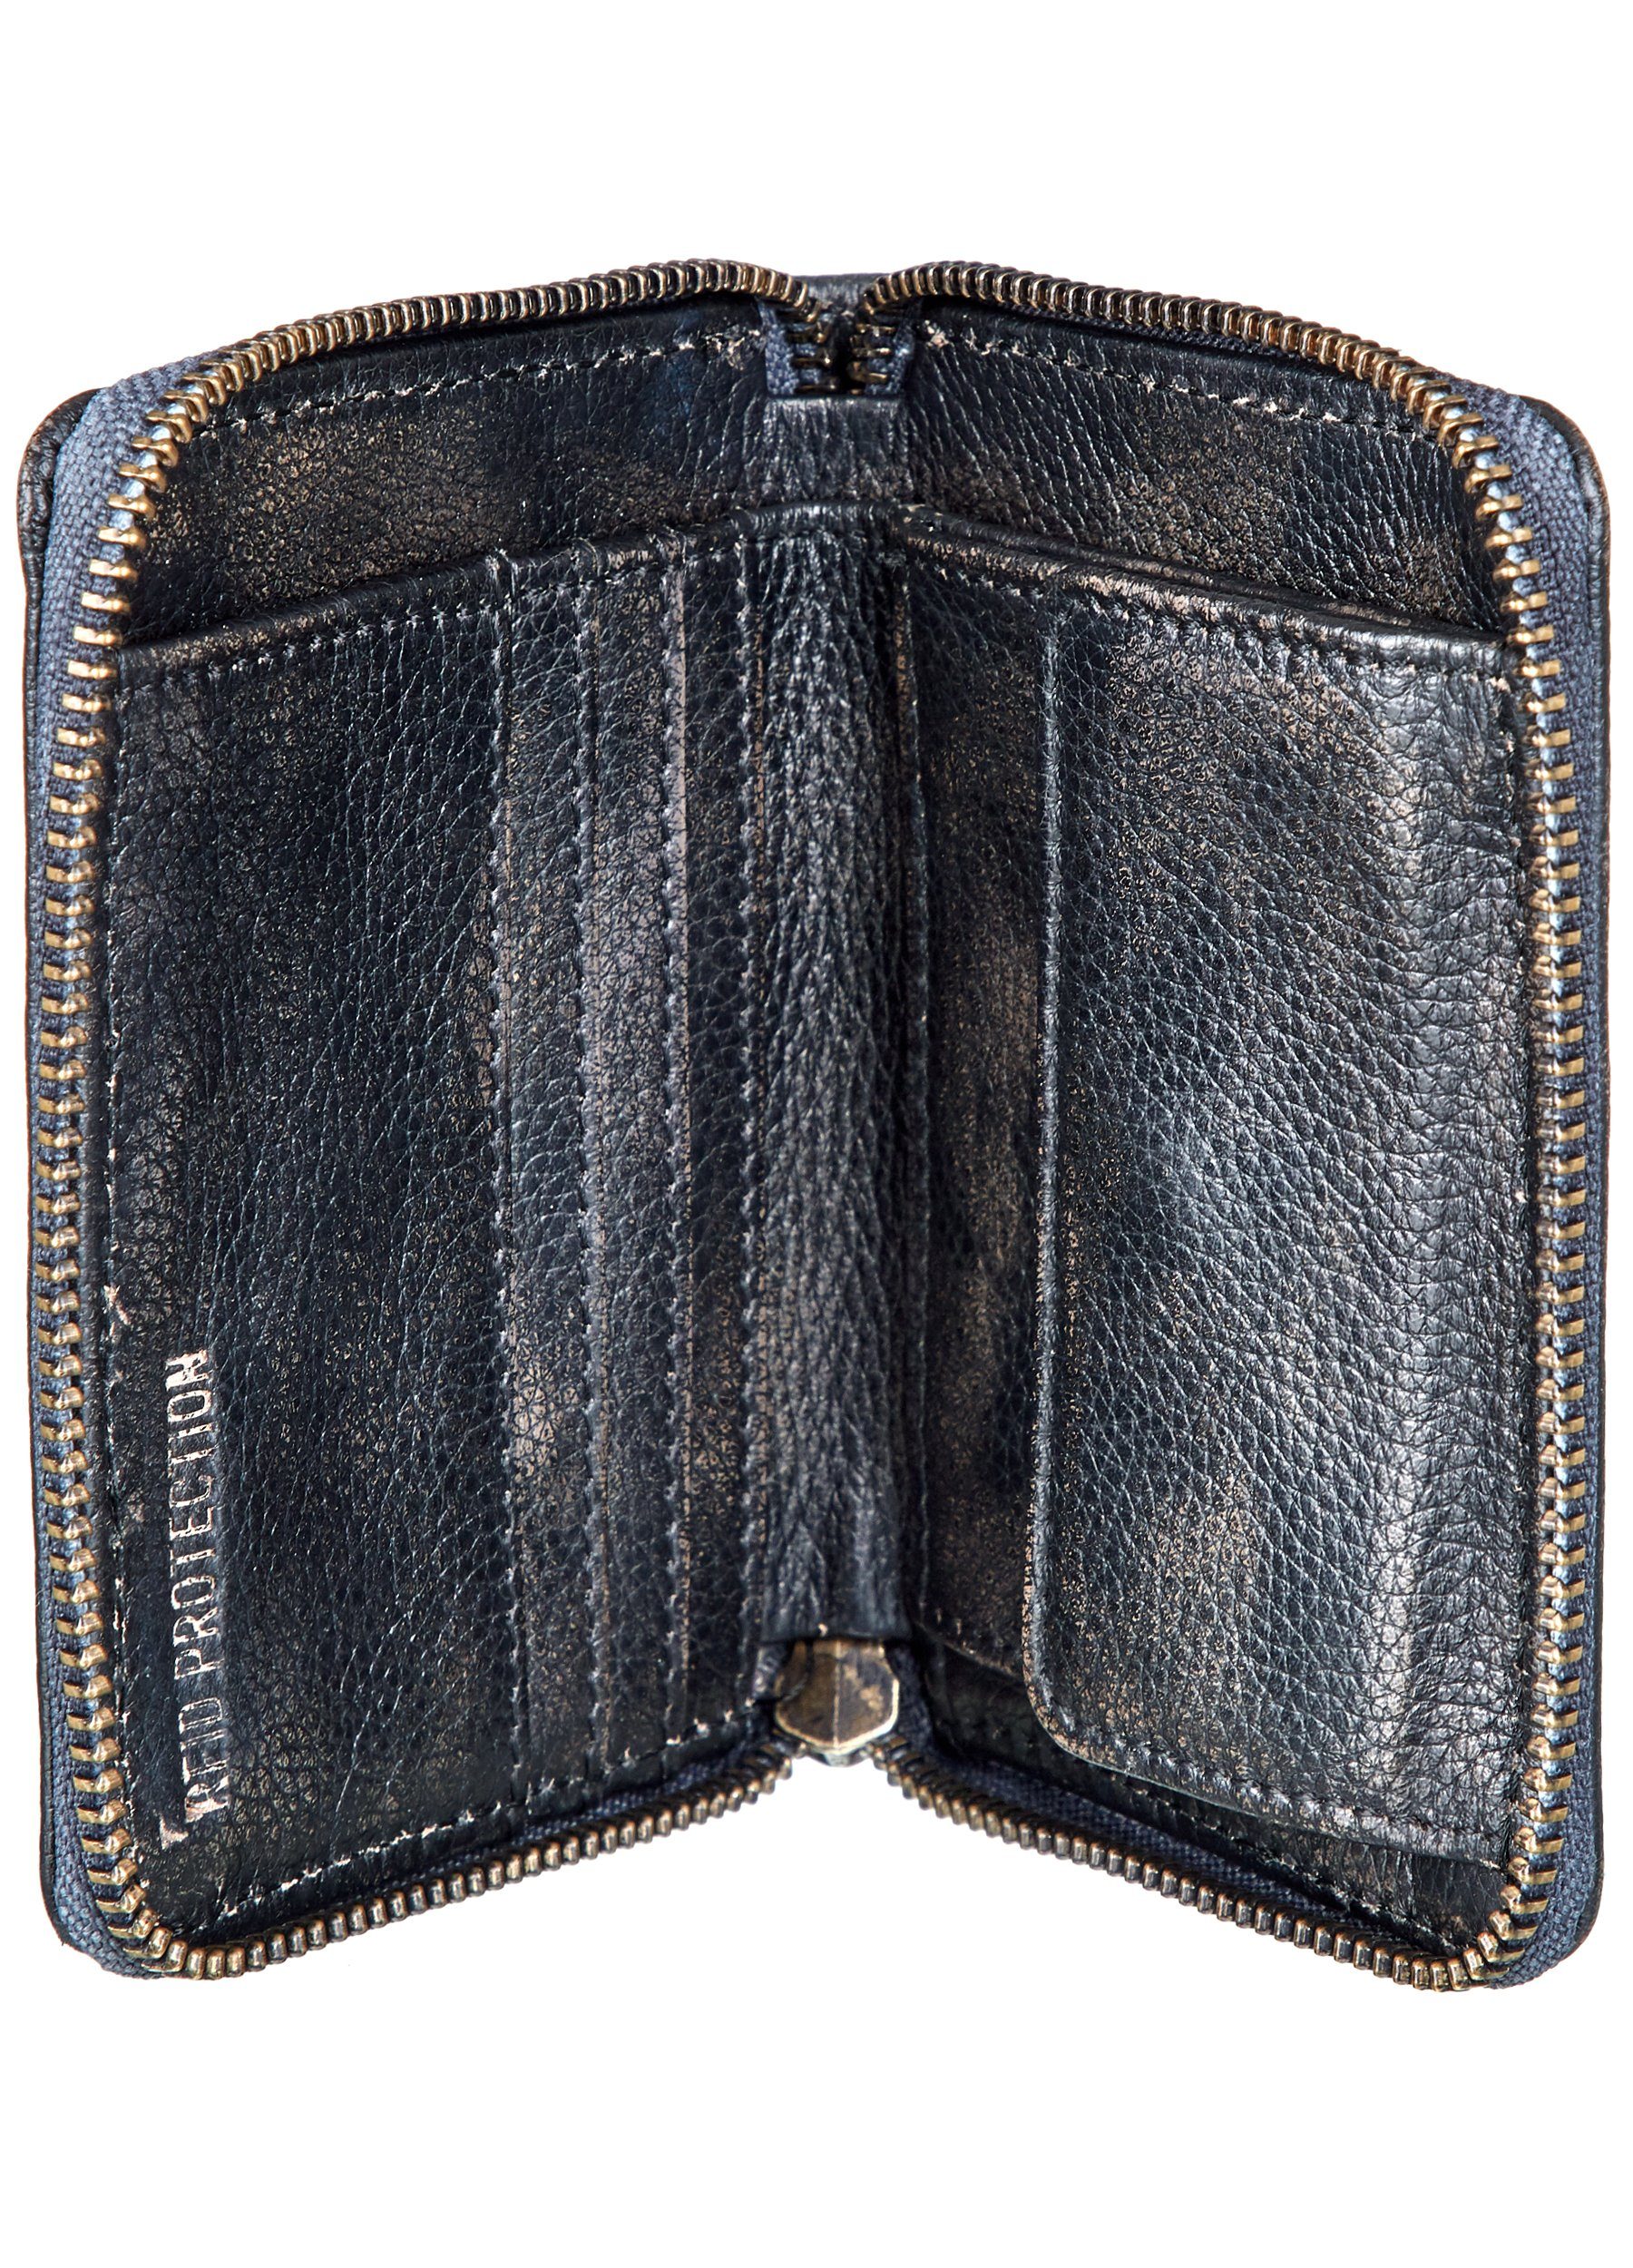 Bull & Hunt Geldbörse midi black distressed zip wallet